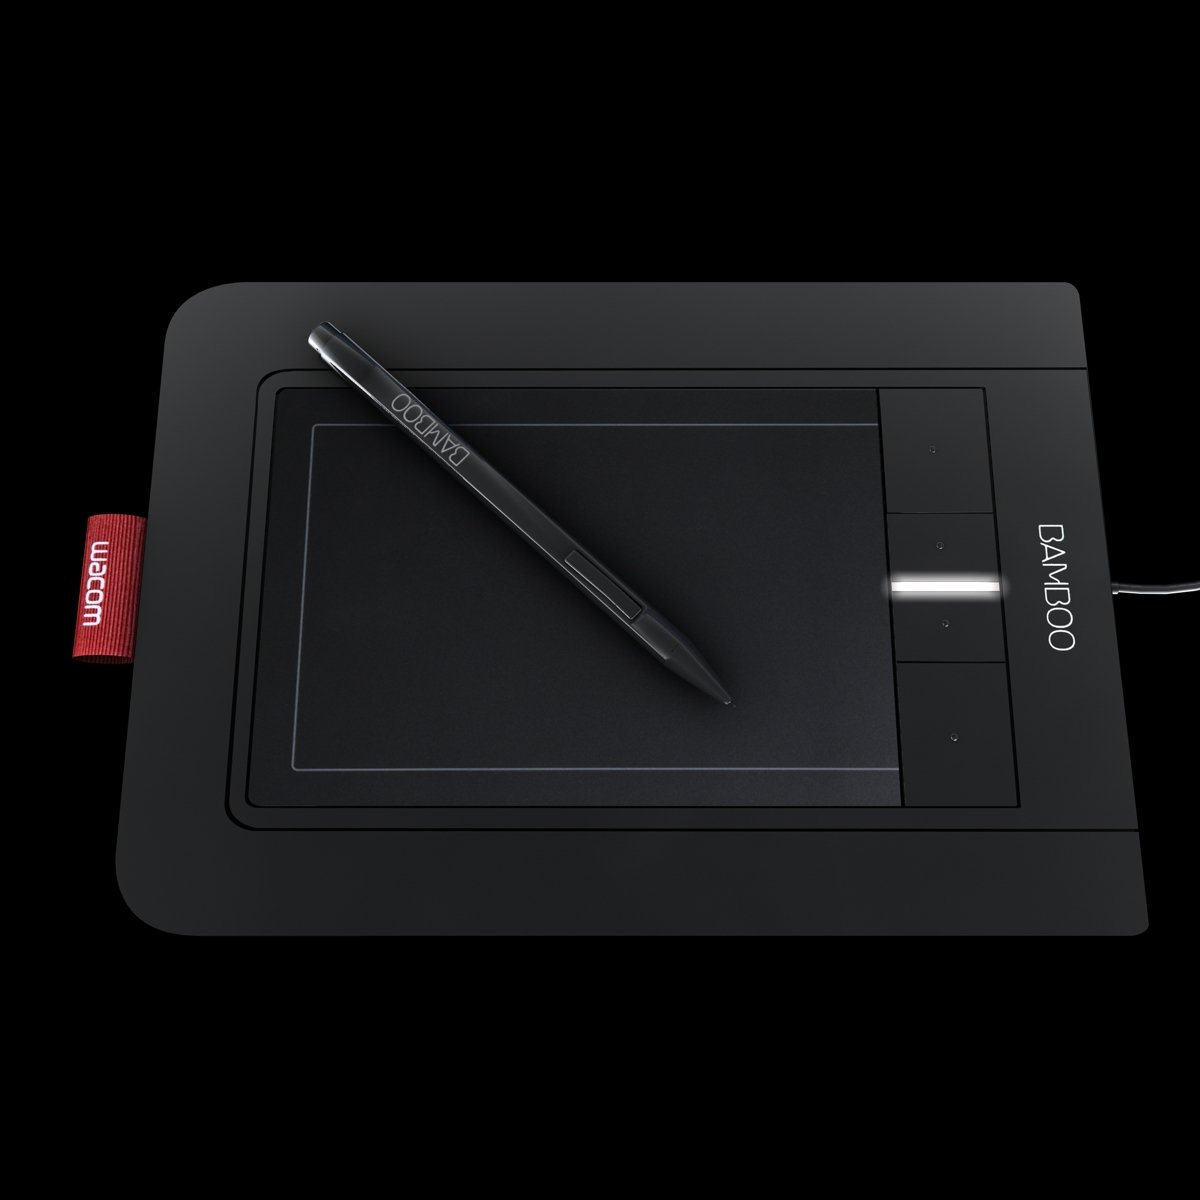 Wacom Bamboo Pen CTL-460 USB Graphics Drawing Tablet Black with Pen L12 |  eBay